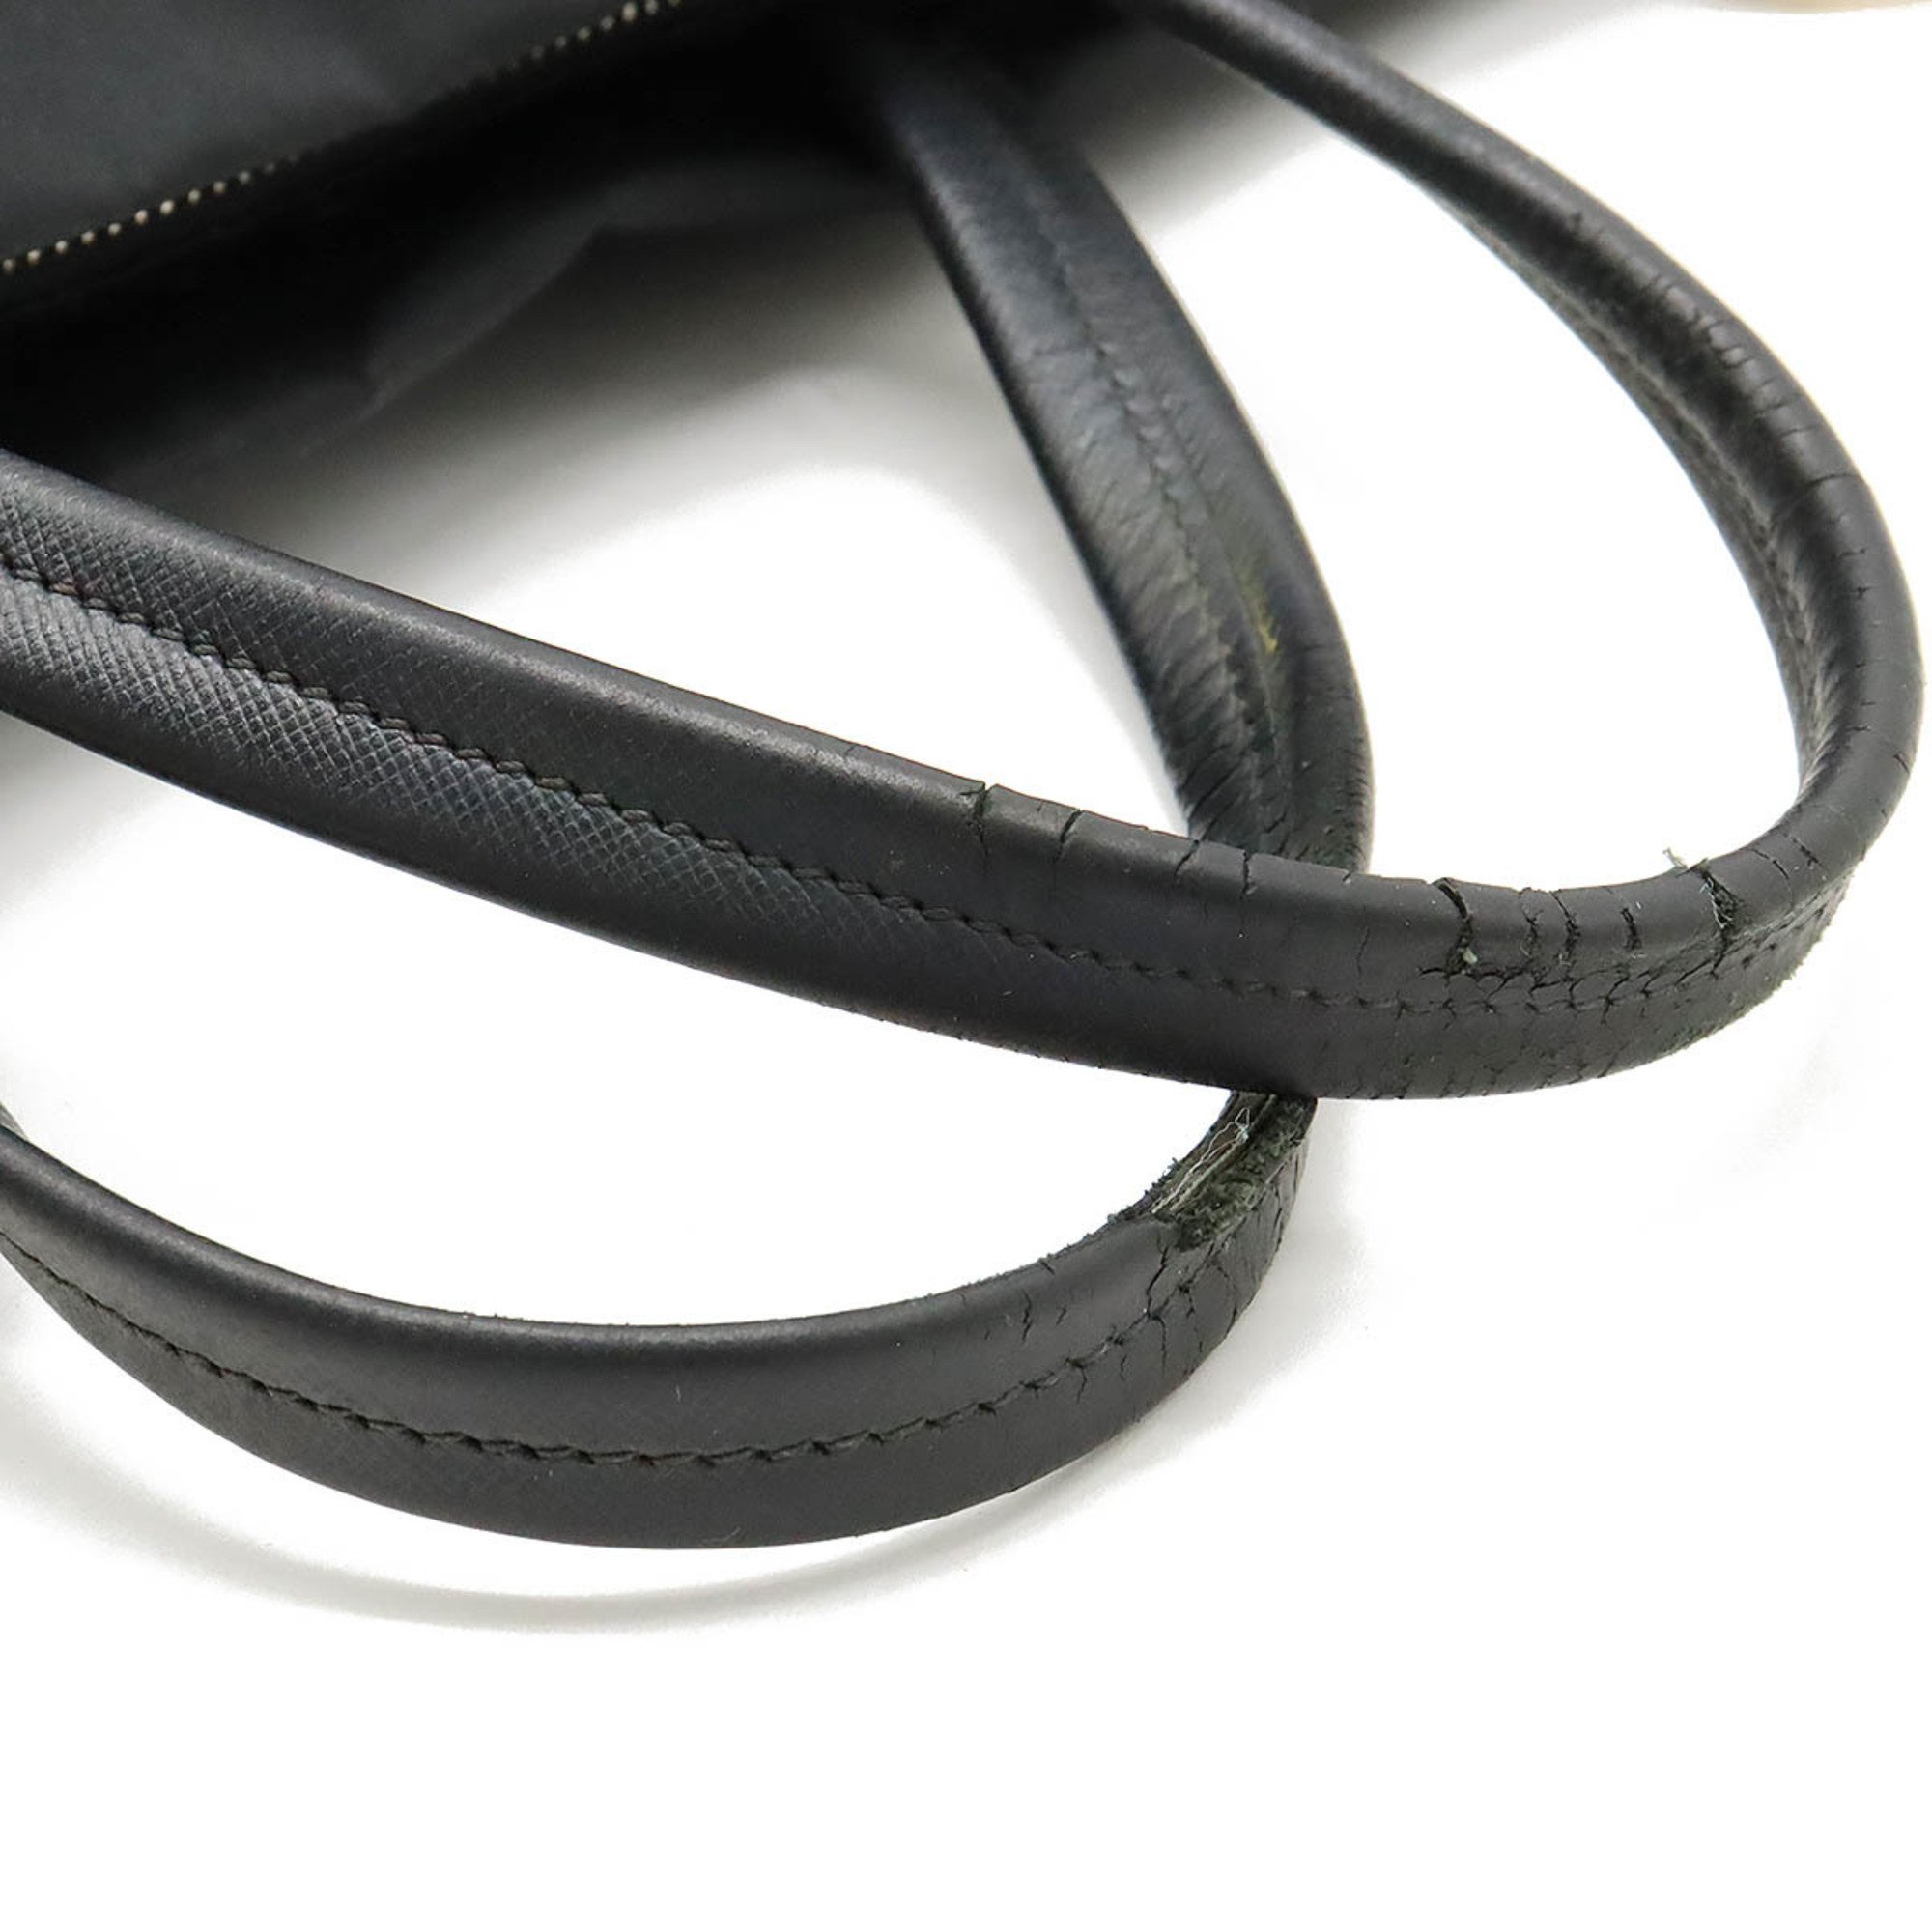 PRADA Prada Tote Bag Handbag Shoulder Nylon Leather NERO Black B1843